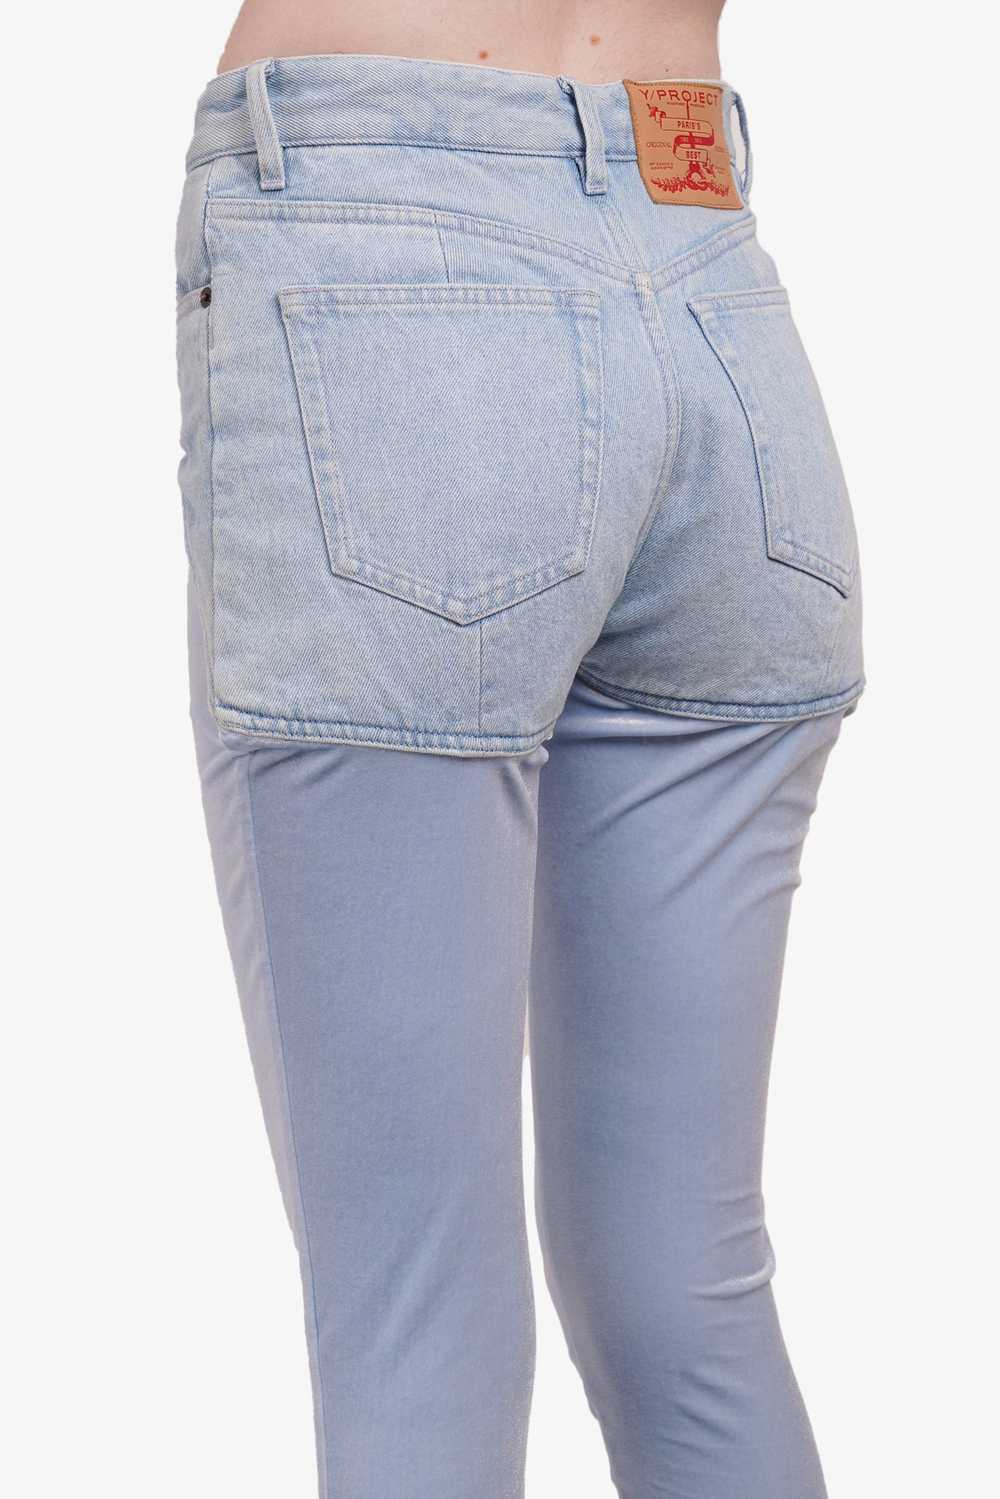 Y Project Blue Denim/Velvet Stirrup Pants Size S - image 5